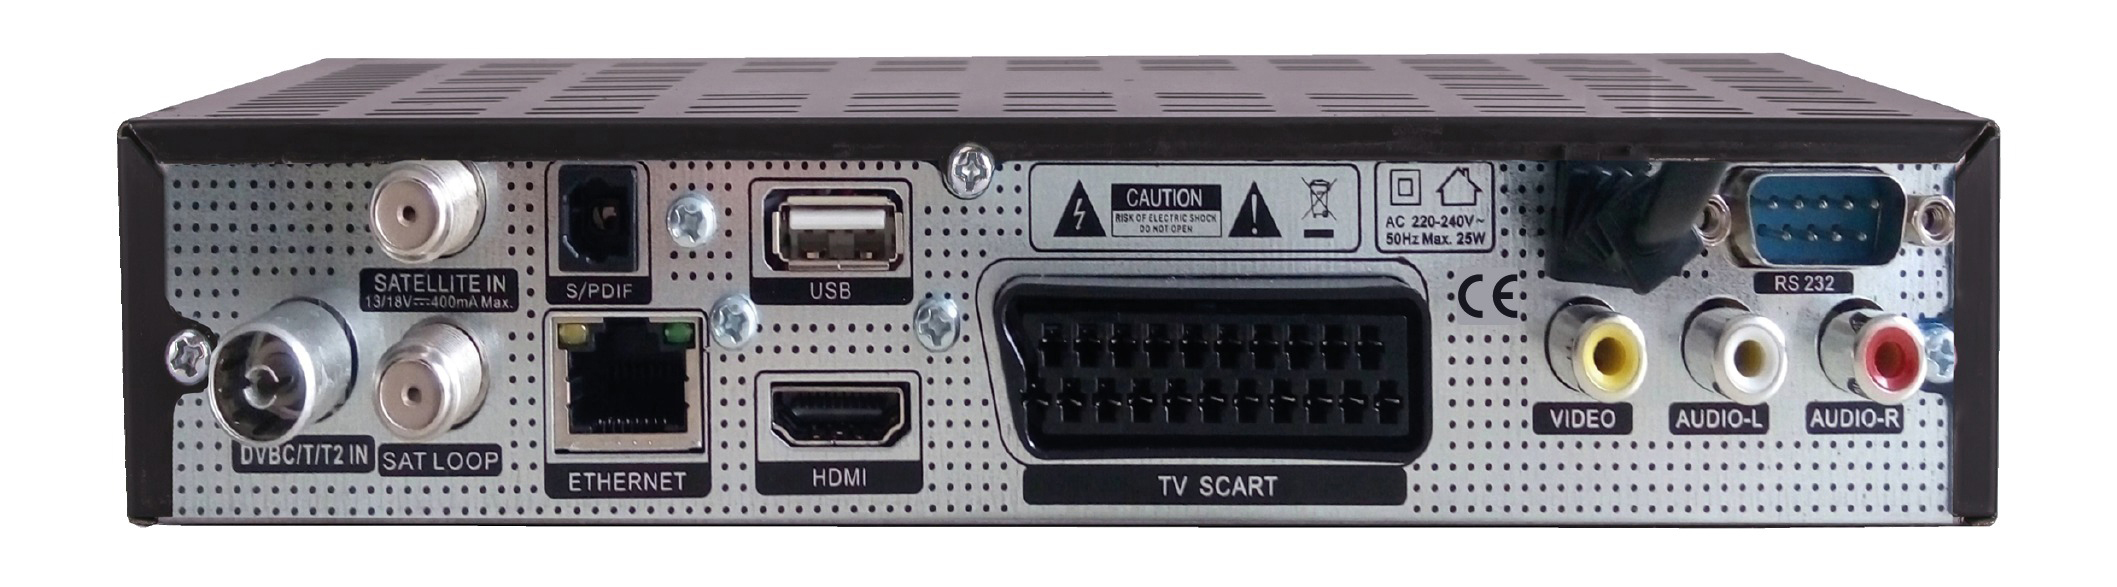 Plus DVB-C, Schwarz) OPTICUM (HDTV, RED HD, Sloth Receiver DVB-S2, PVR Combo DVB-C2, PVR-Funktion, DVB-S, Twin Combo Tuner, DVB-T2